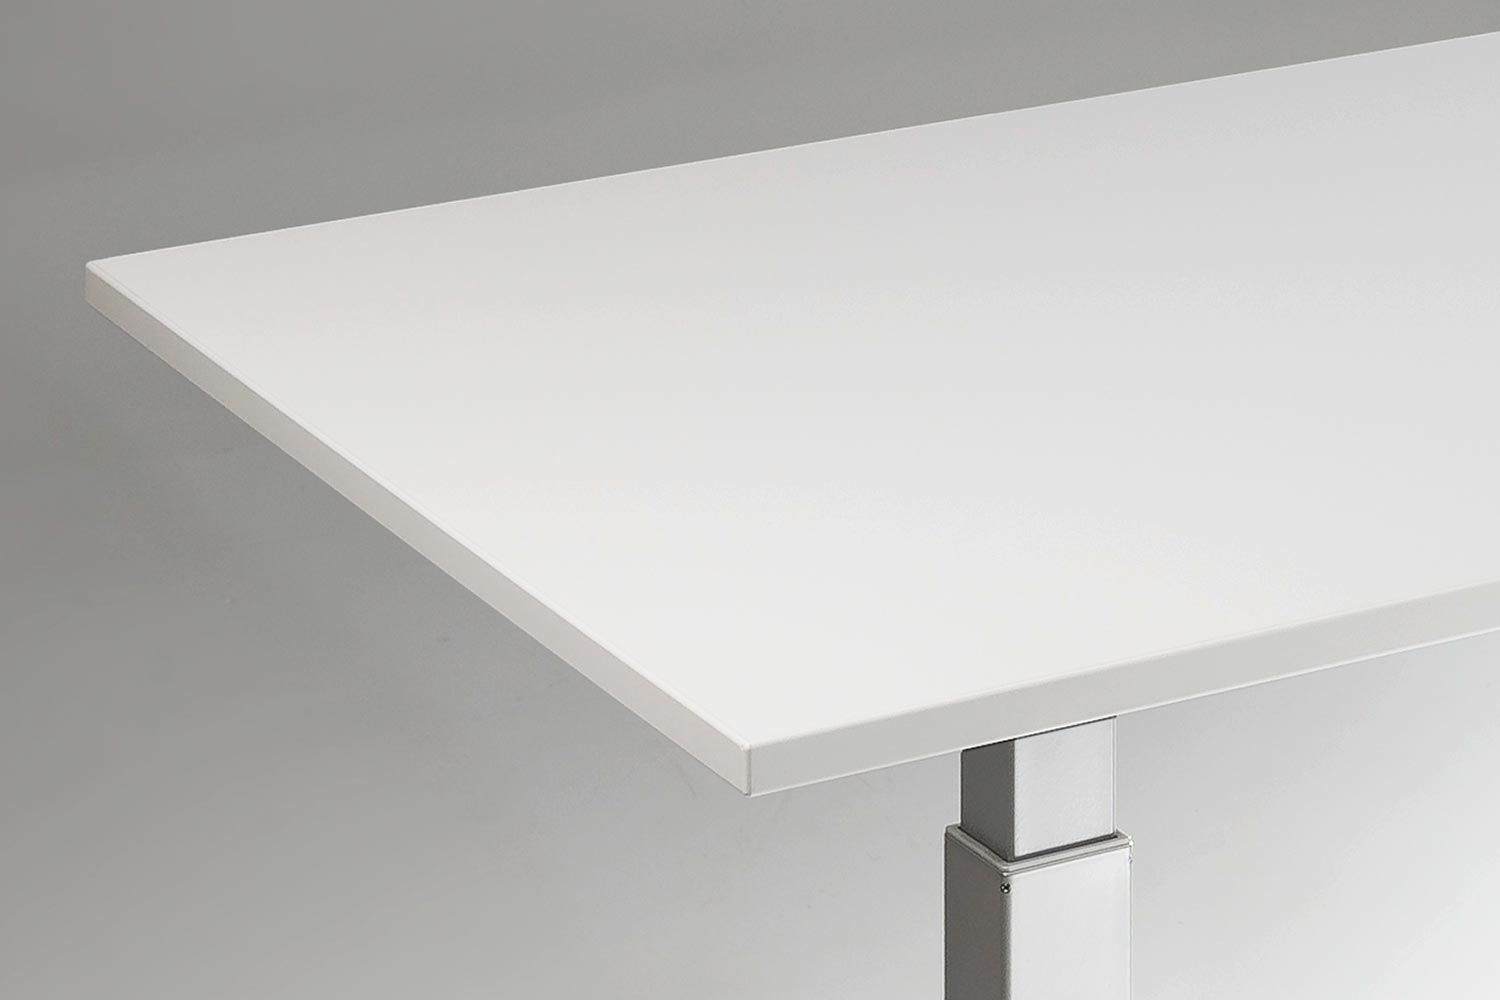 White Medium Standing Desk Top 24” x 48” x 3/4”